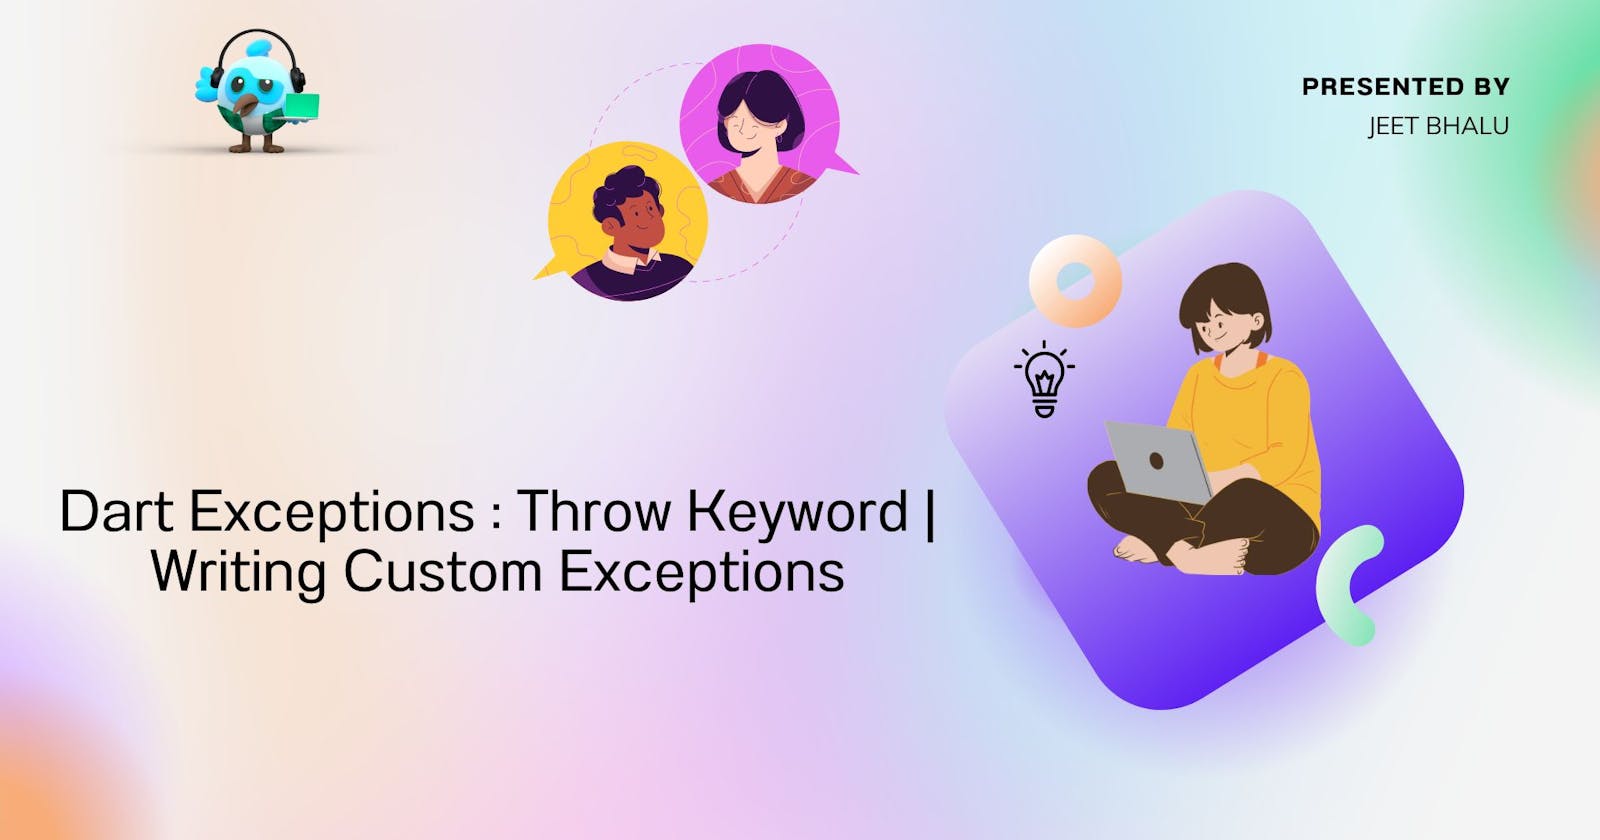 Dart Exceptions : Throw Keyword | Writing Custom Exceptions